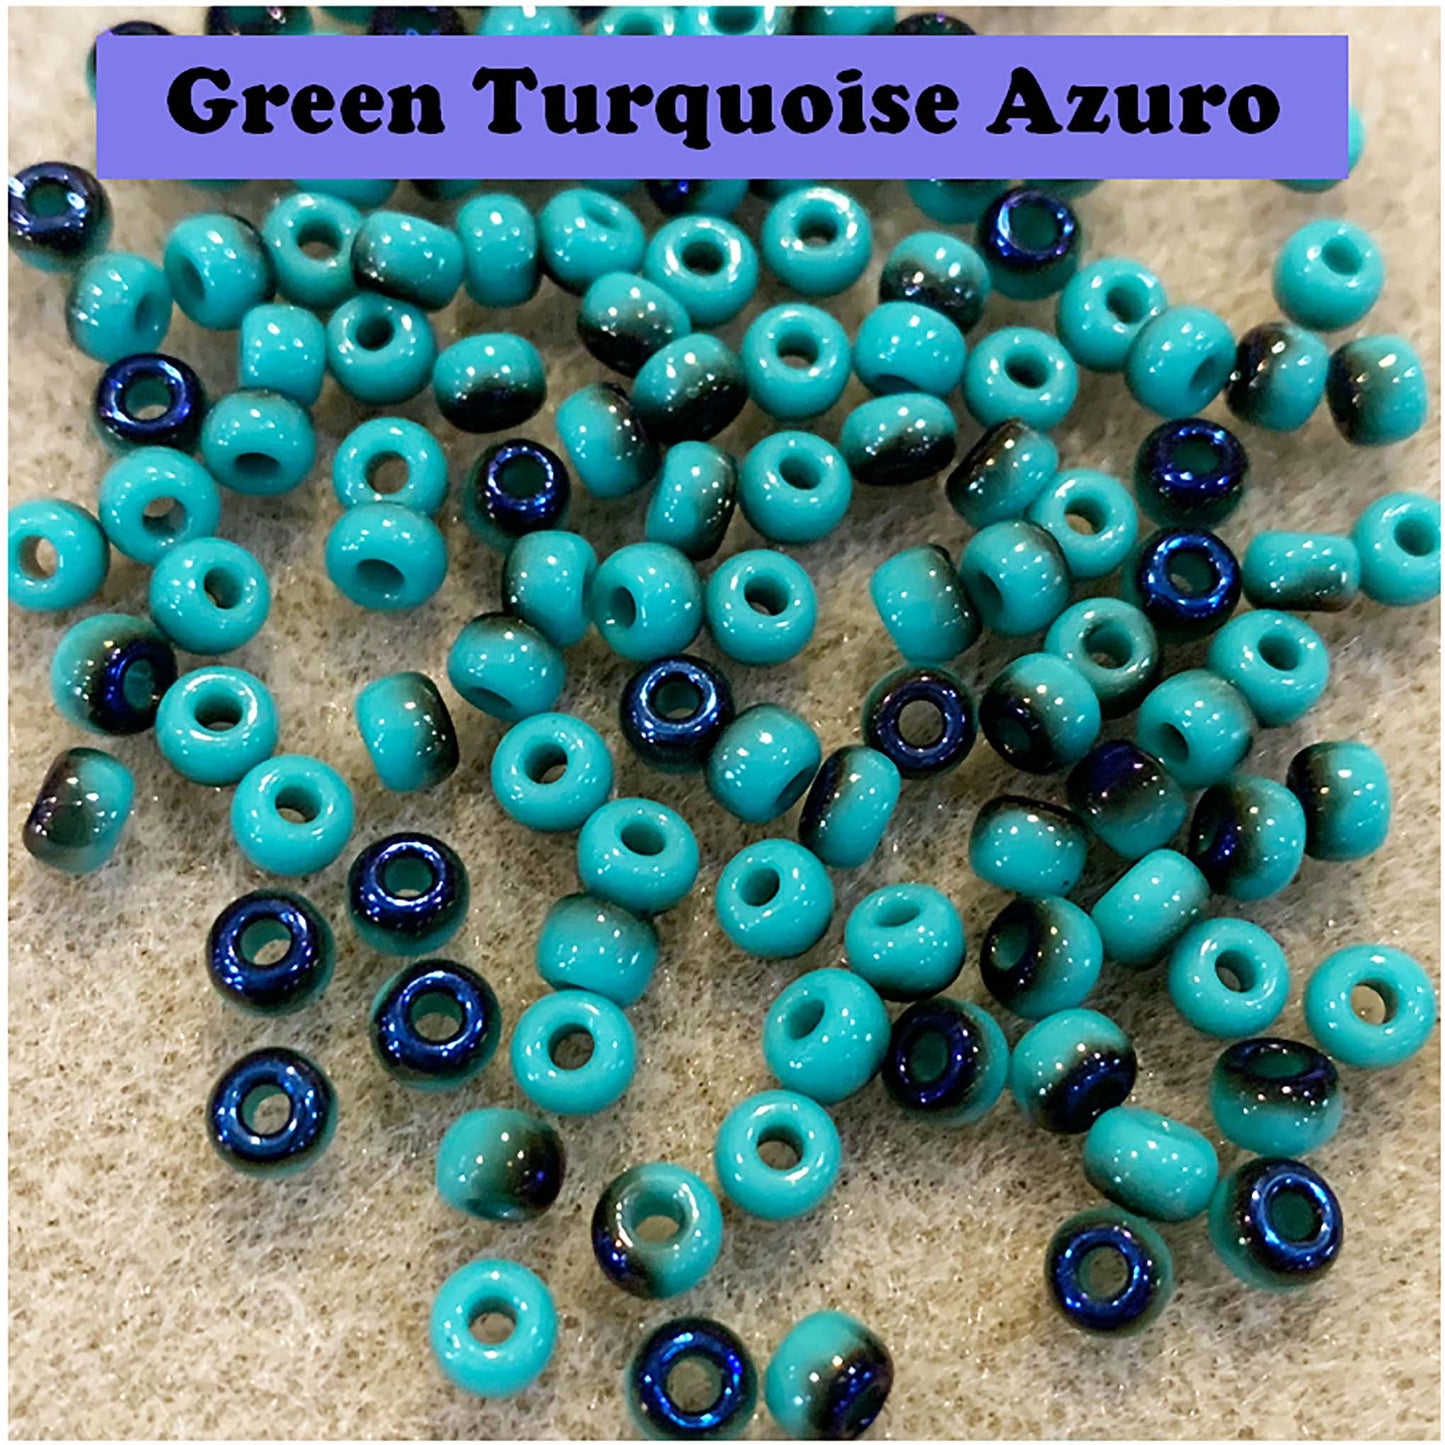 Union Seed Beads Size 6/0 (20 grams) Miyuki Made Czech Finish - choose color